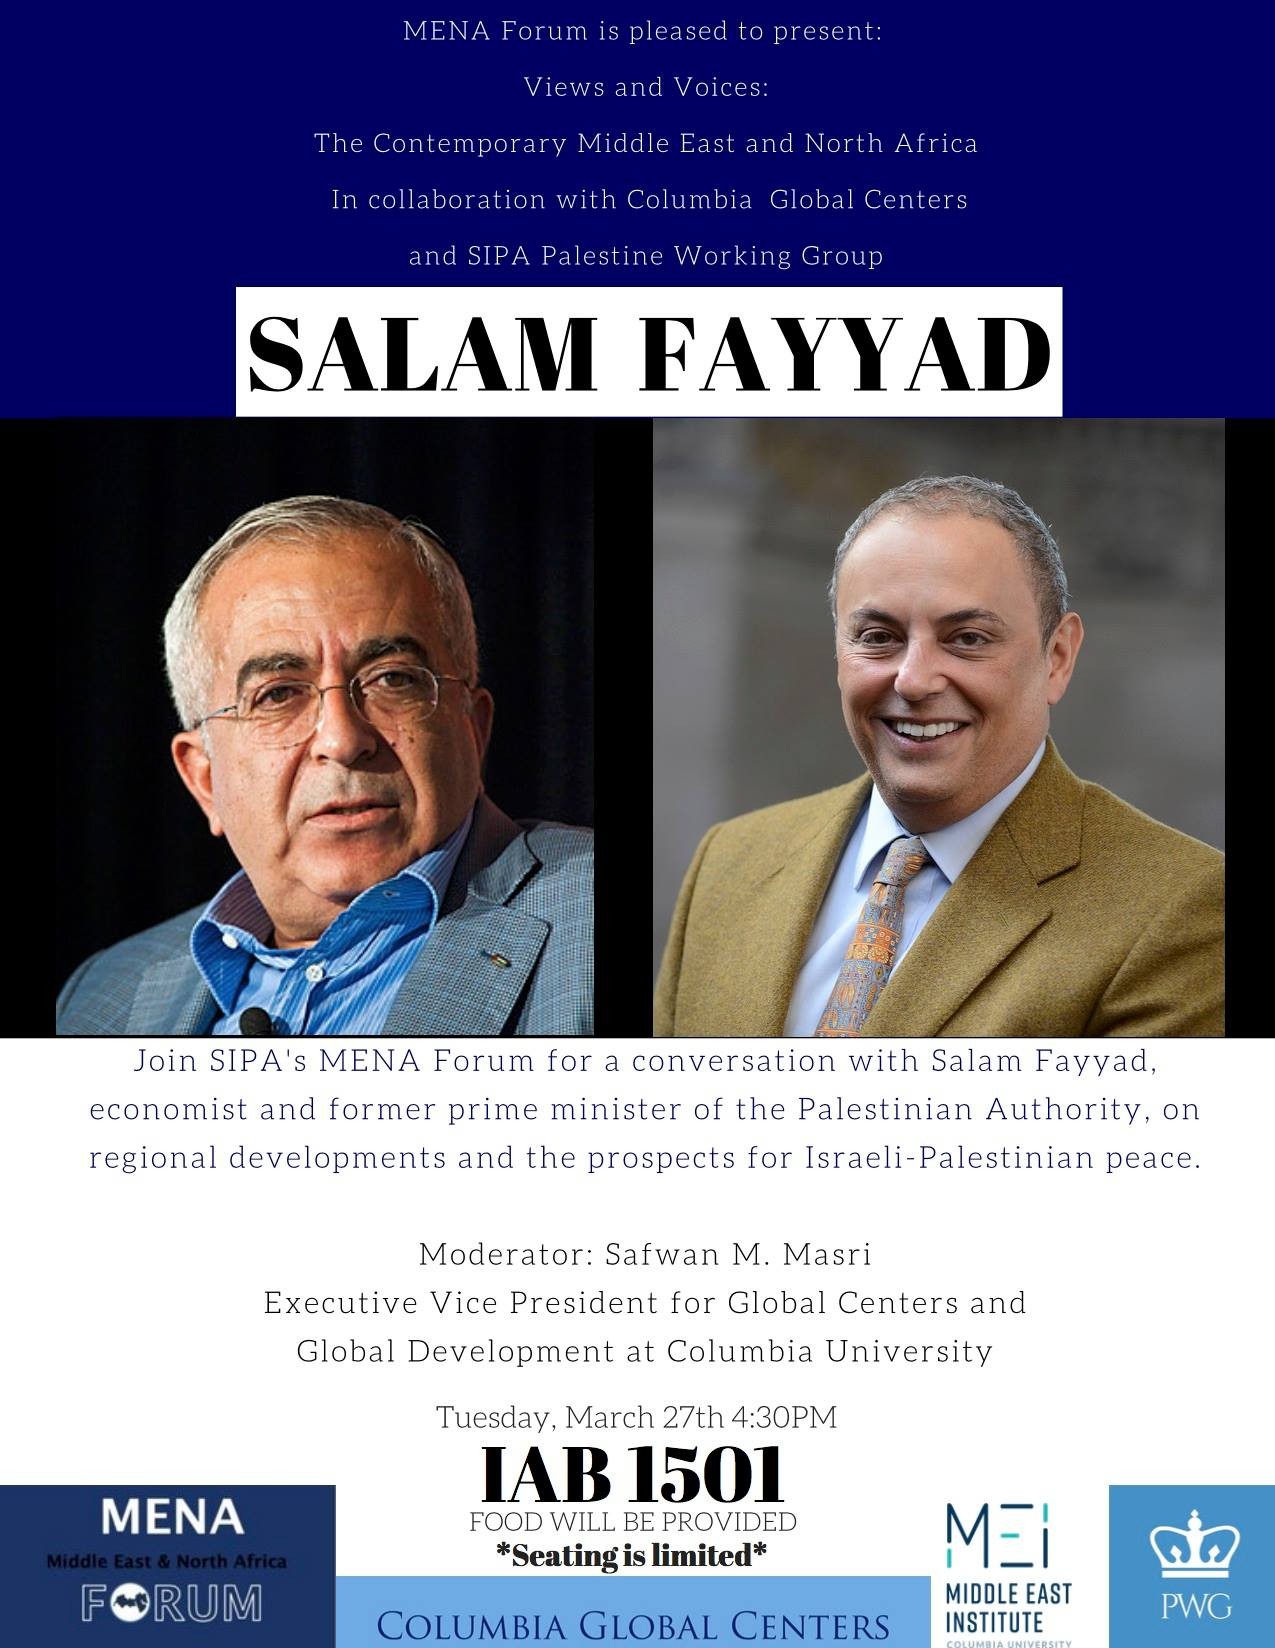 A Conversation with Salam Fayyad